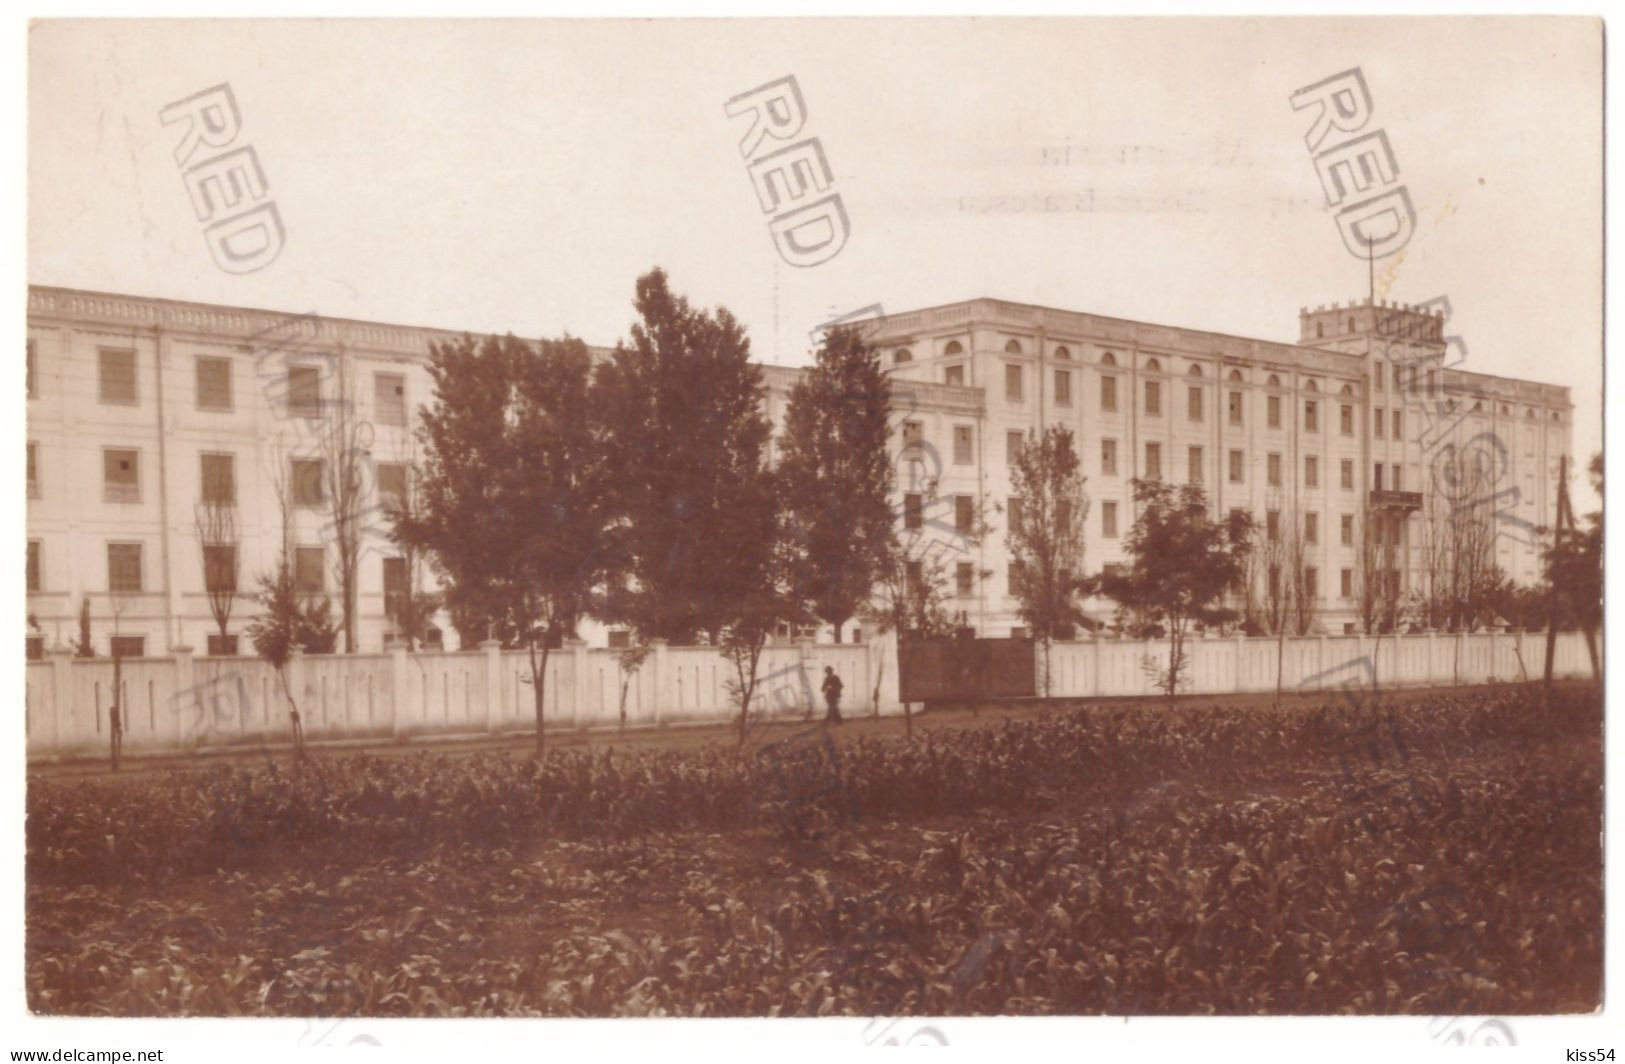 RO 47 - 25265 ALEXANDRIA, Teleorman, Bratescu Mill, Romania - Old Postcard - Used - Roumanie